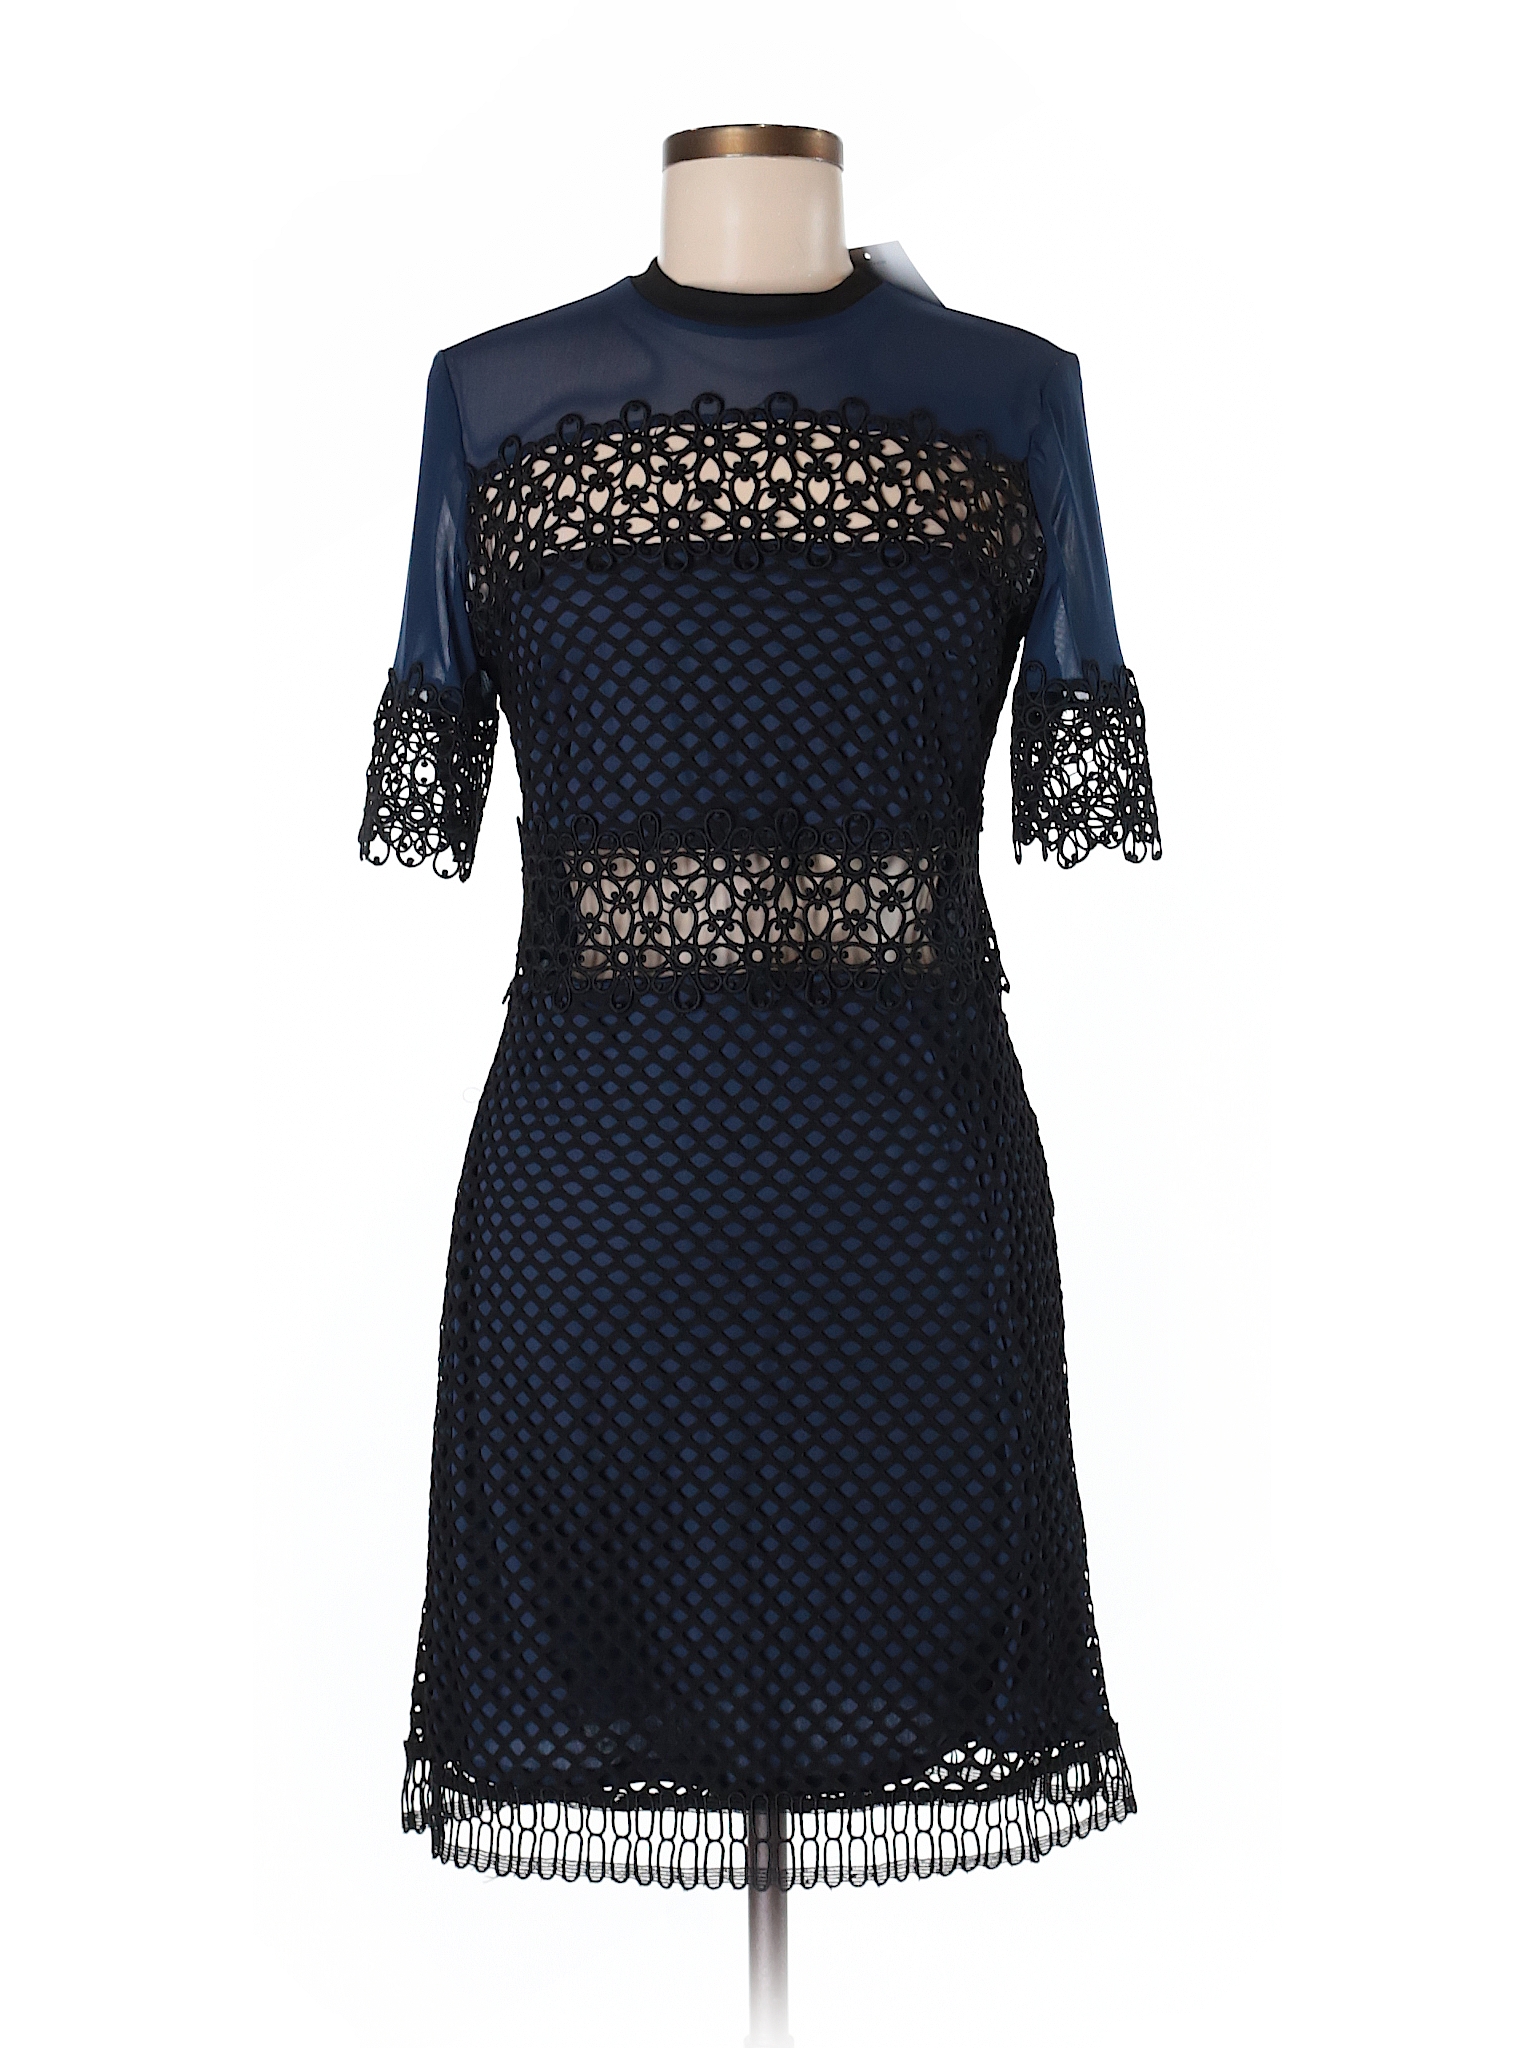 Topshop Lace Black Casual Dress Size 8 - 72% off | thredUP